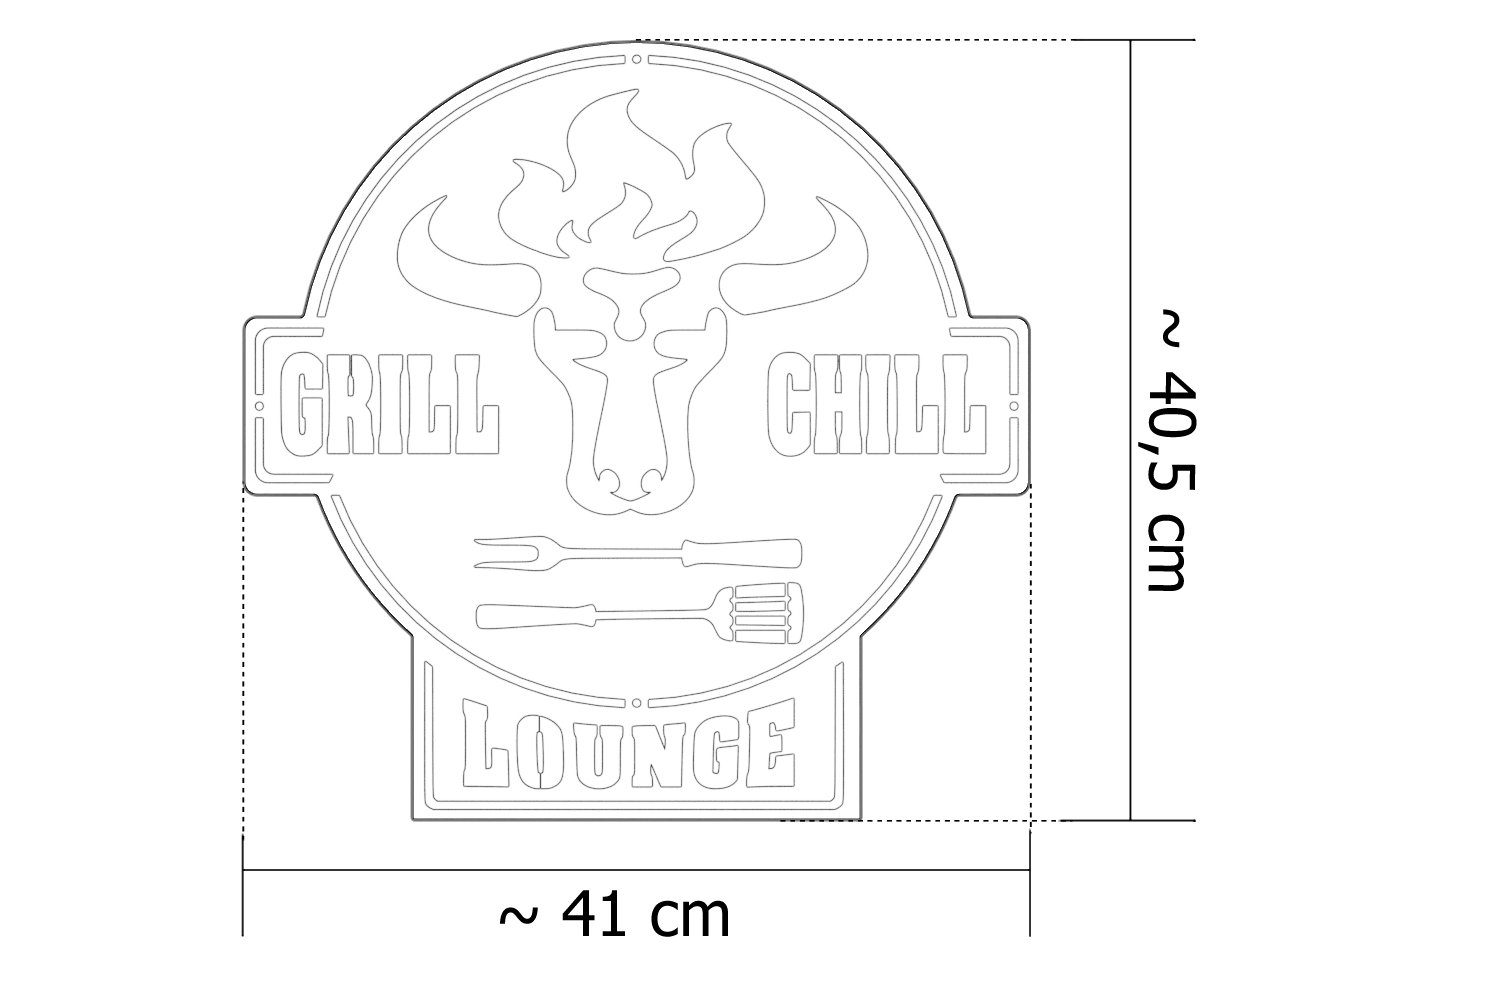 Lounge tuning-art Lounge Edelrost Bulle Schild & Stahl Chill GC01-E + Grill Wanddekoobjekt Grill Edelrost